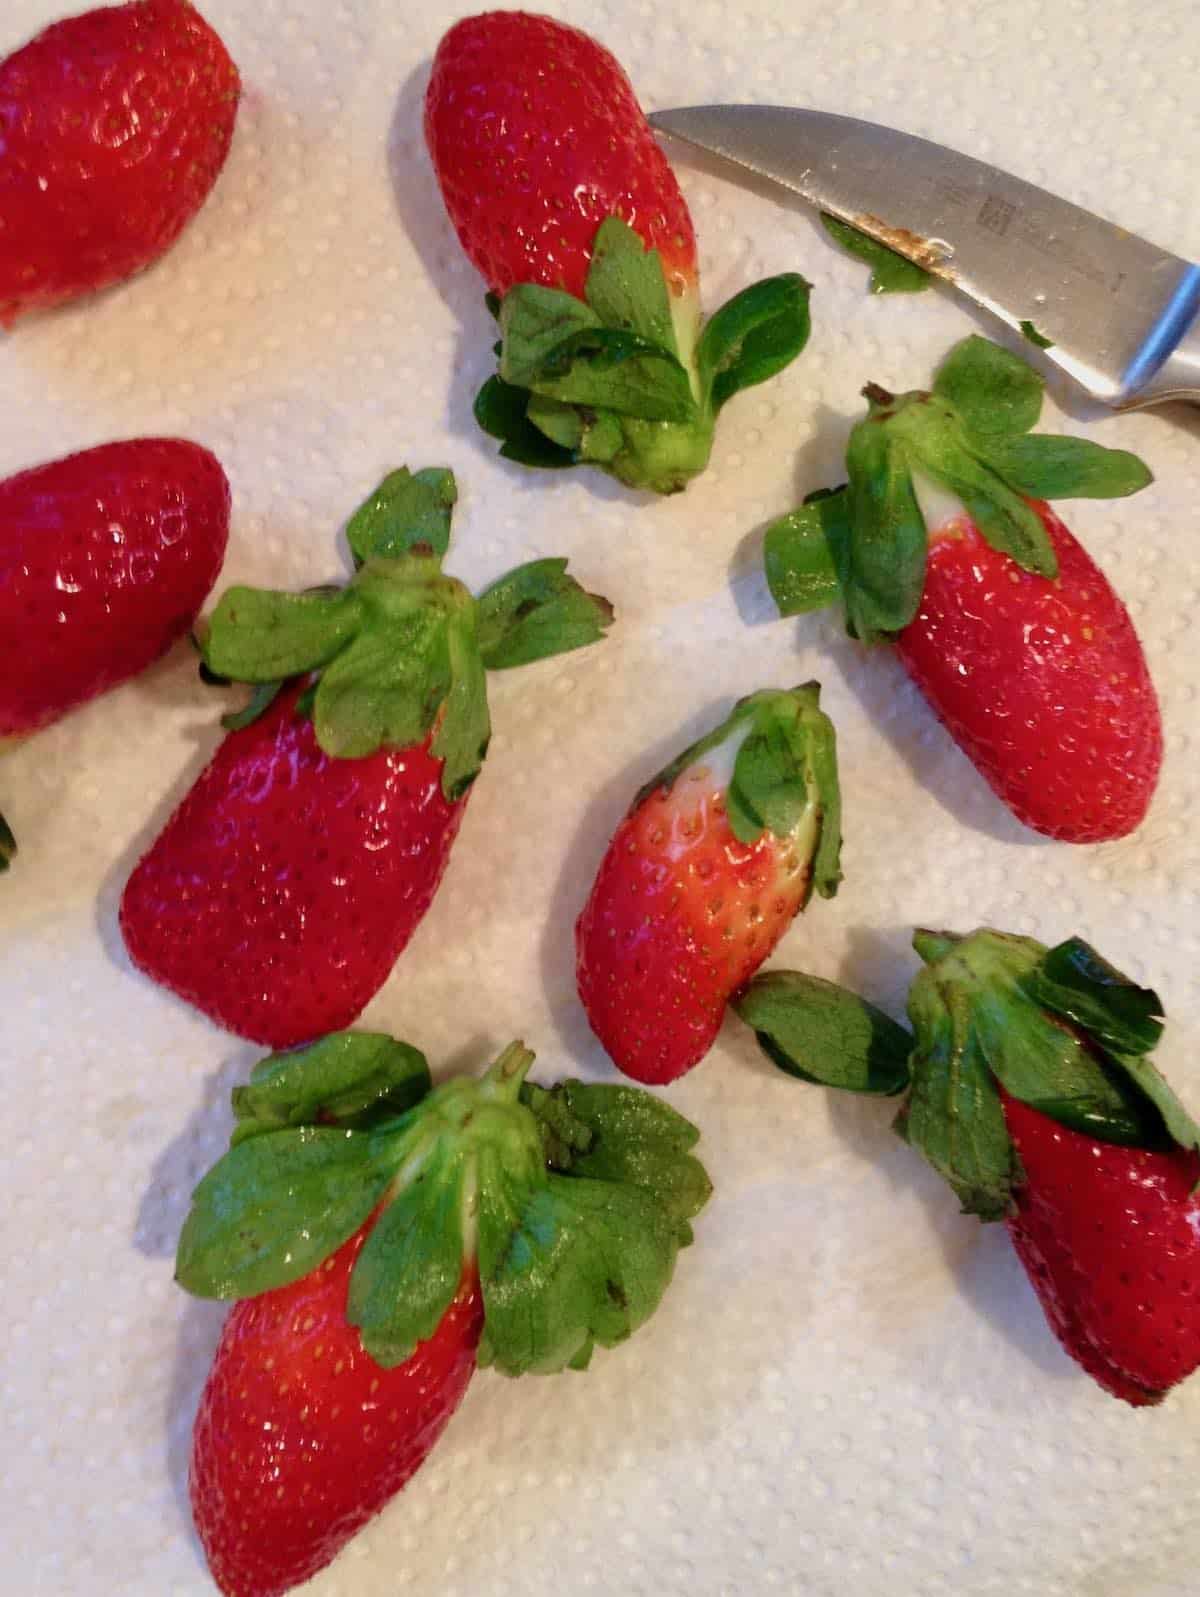 torpedo shaped strawberries from Florida-super sweet